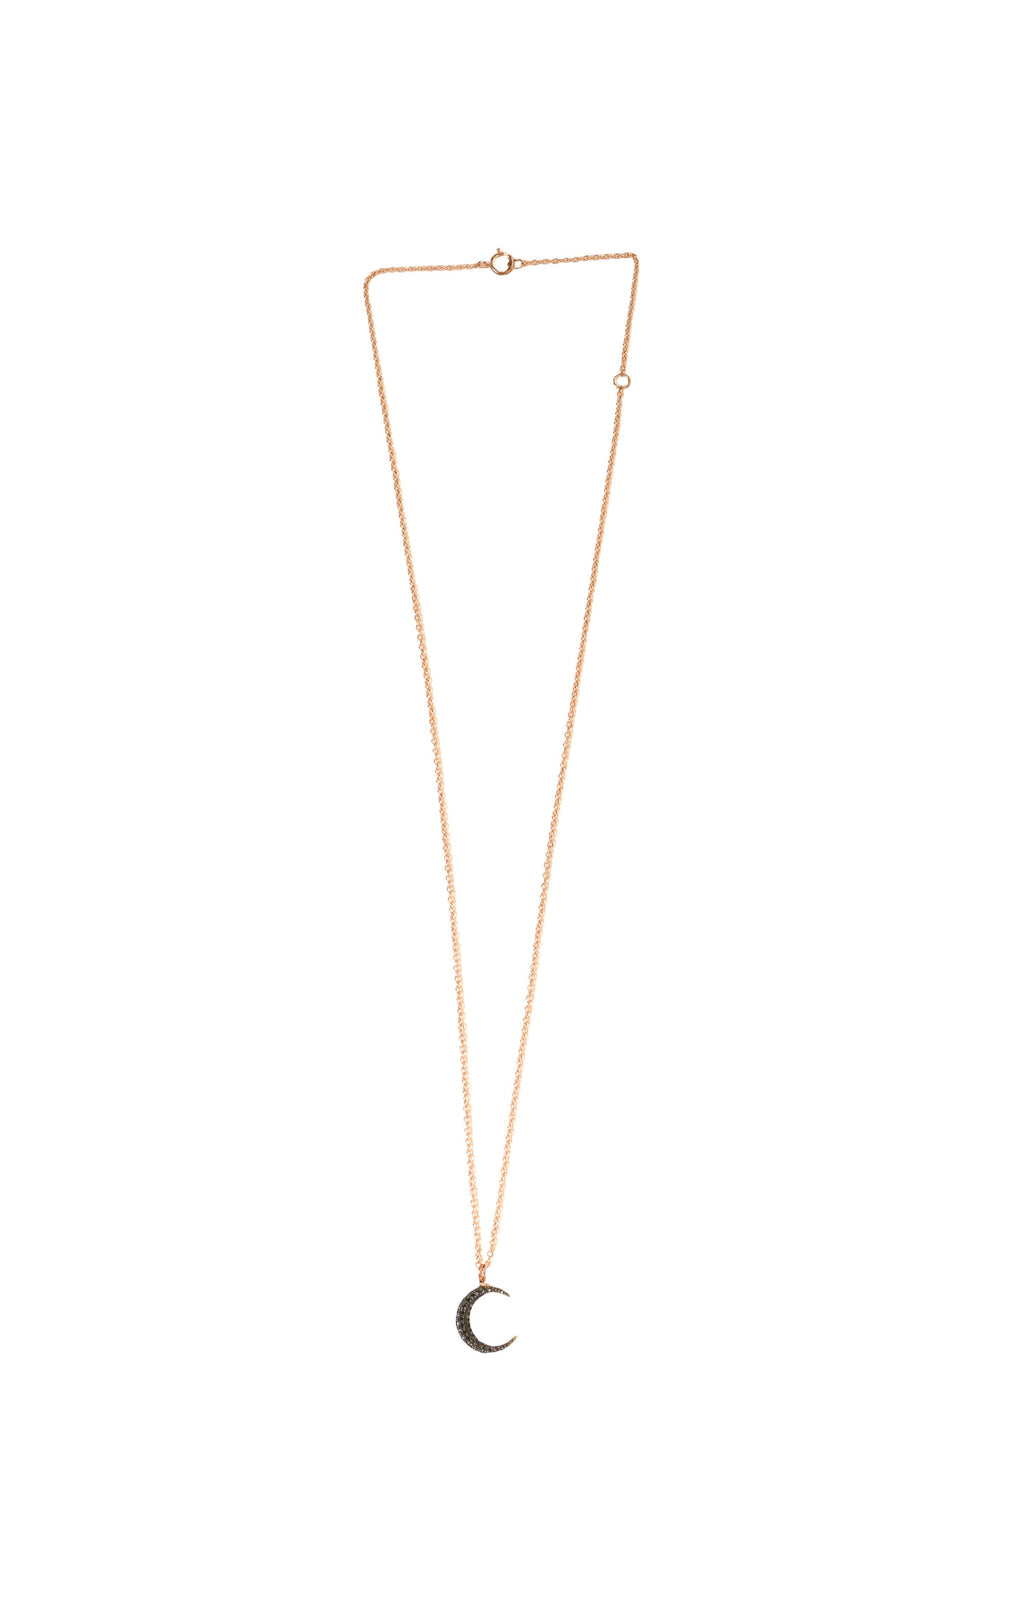 Necklace Size: 16"-18" x 1mm; Charm: 0.375" x 0.5"